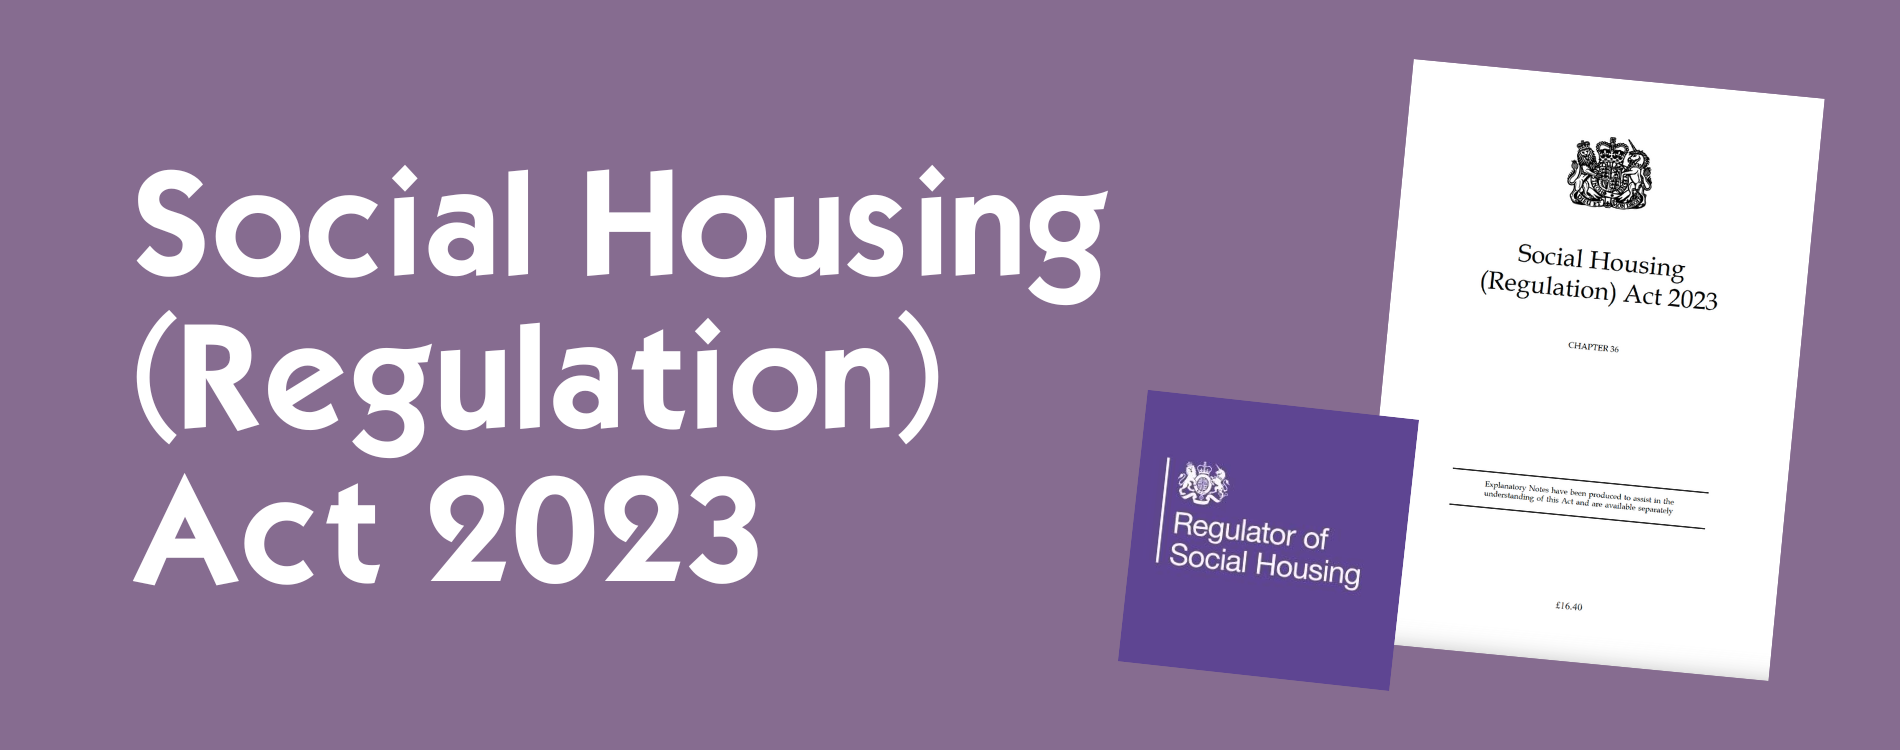 Tpas :: Social Housing (Regulation) Act 2023